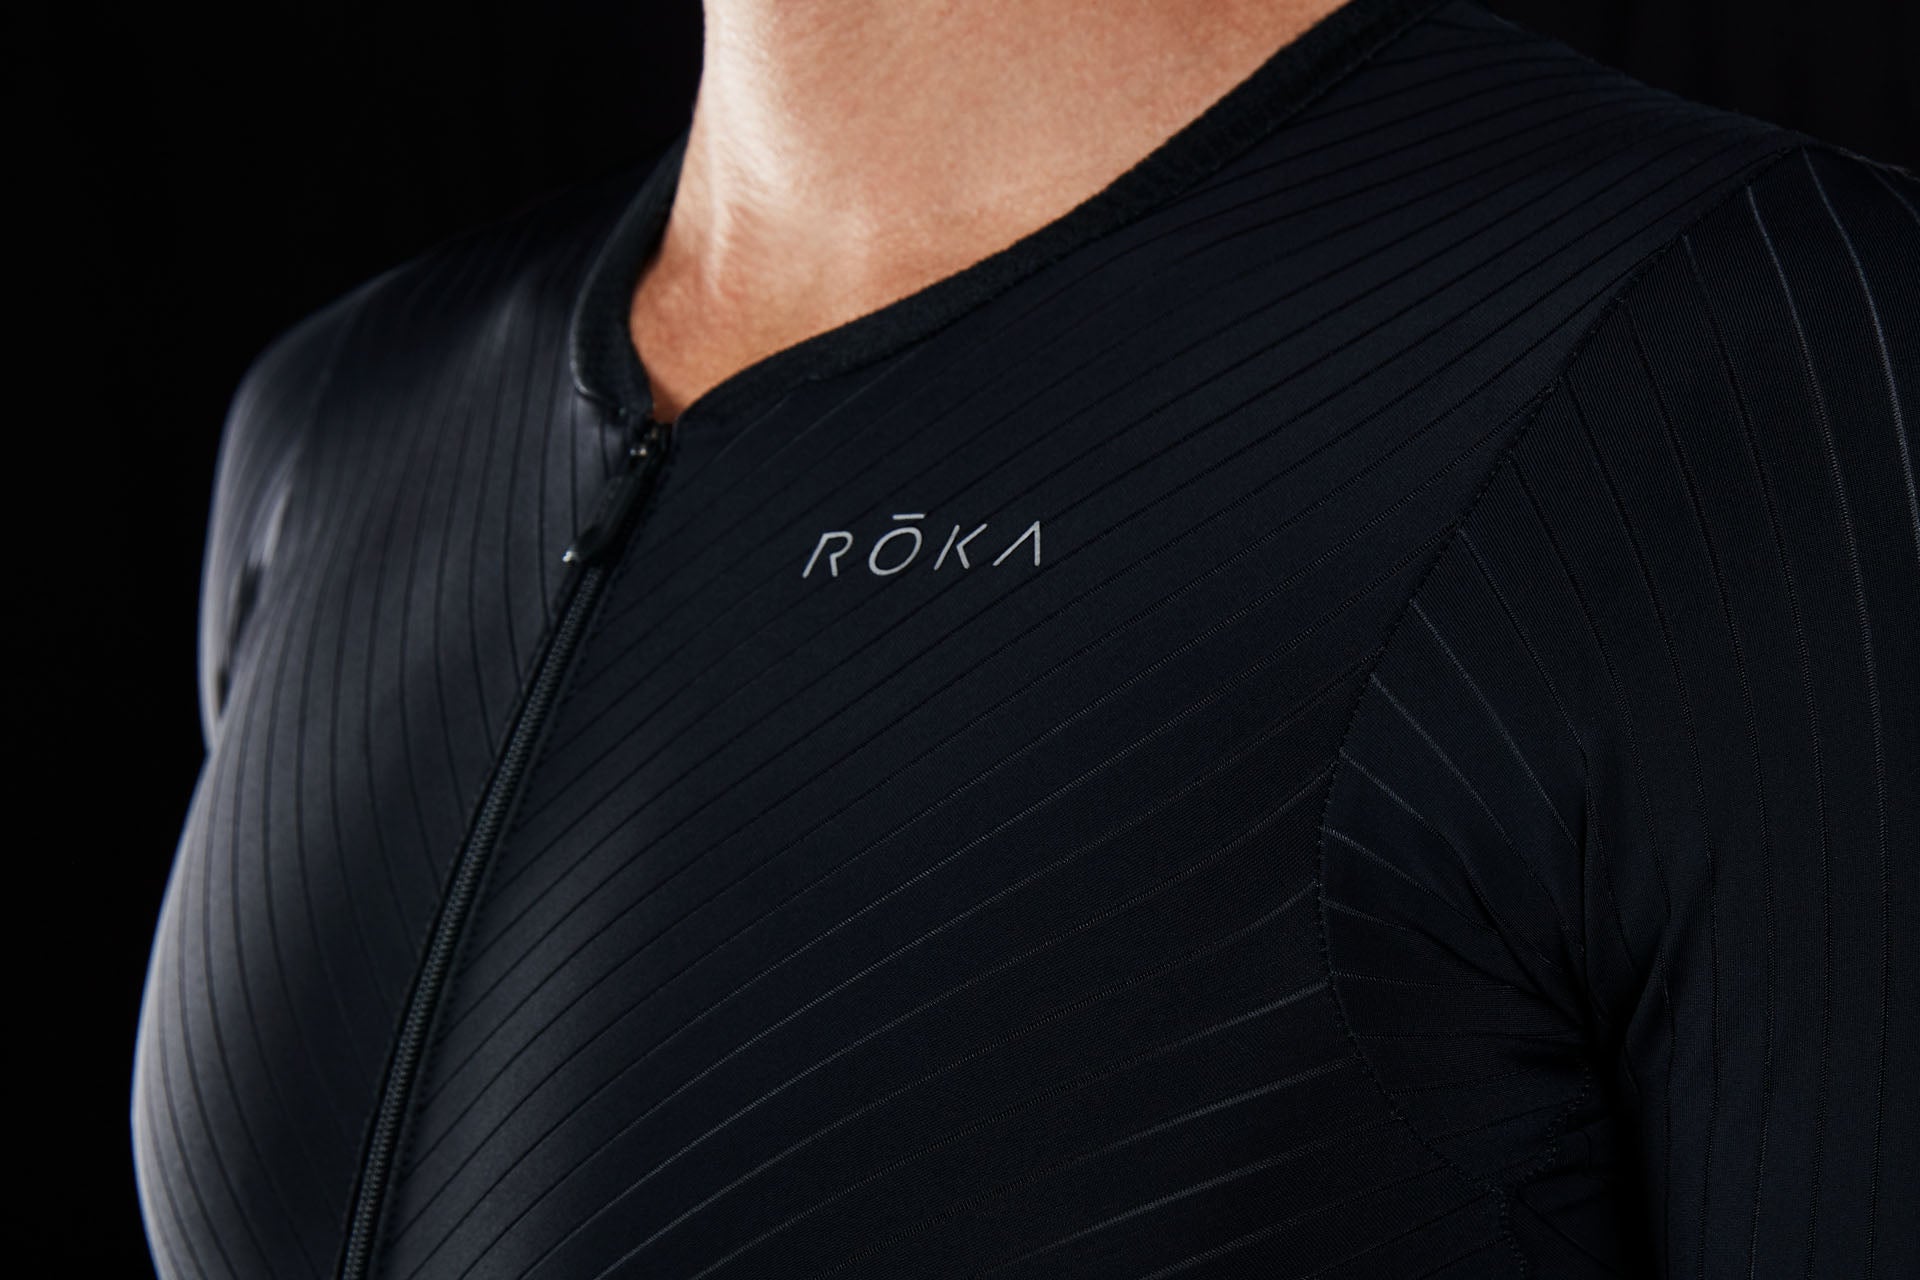 Chest close up with ROKA logo